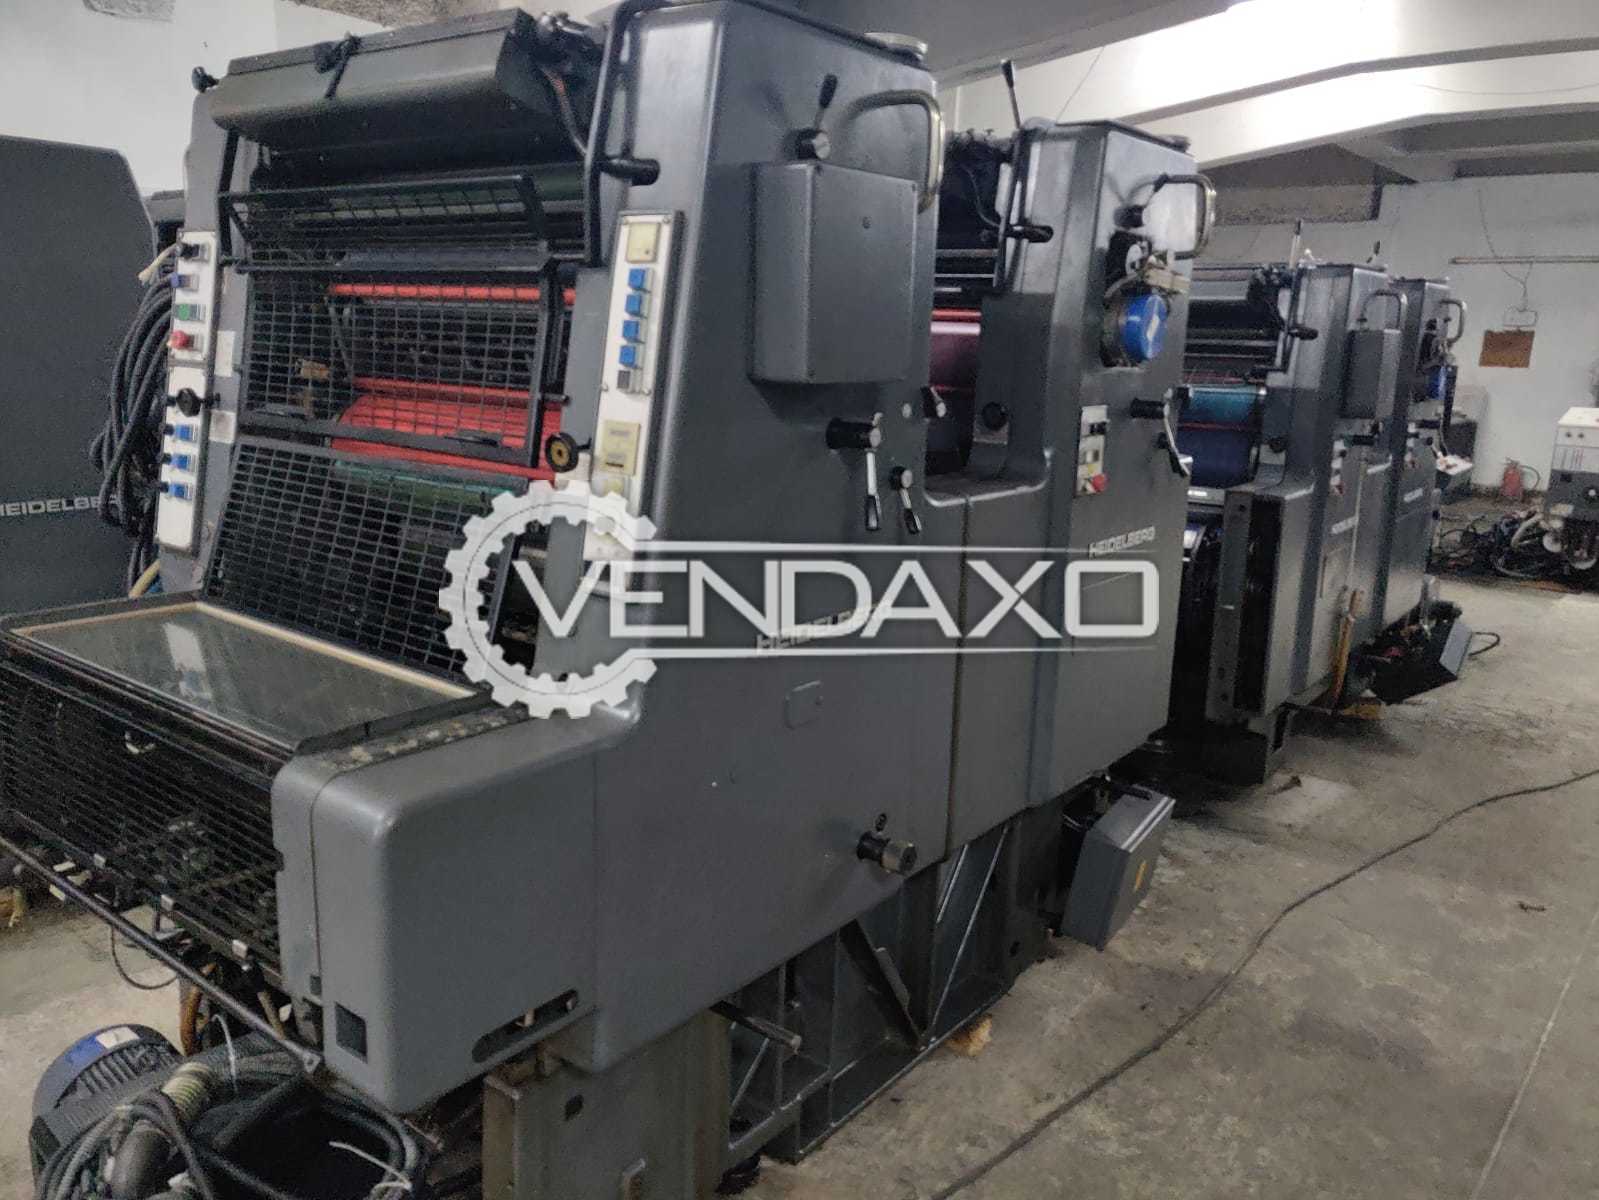 Heidelberg MOV 609 Offset Printing Machine - 19 x 26 Inch, 4 Color